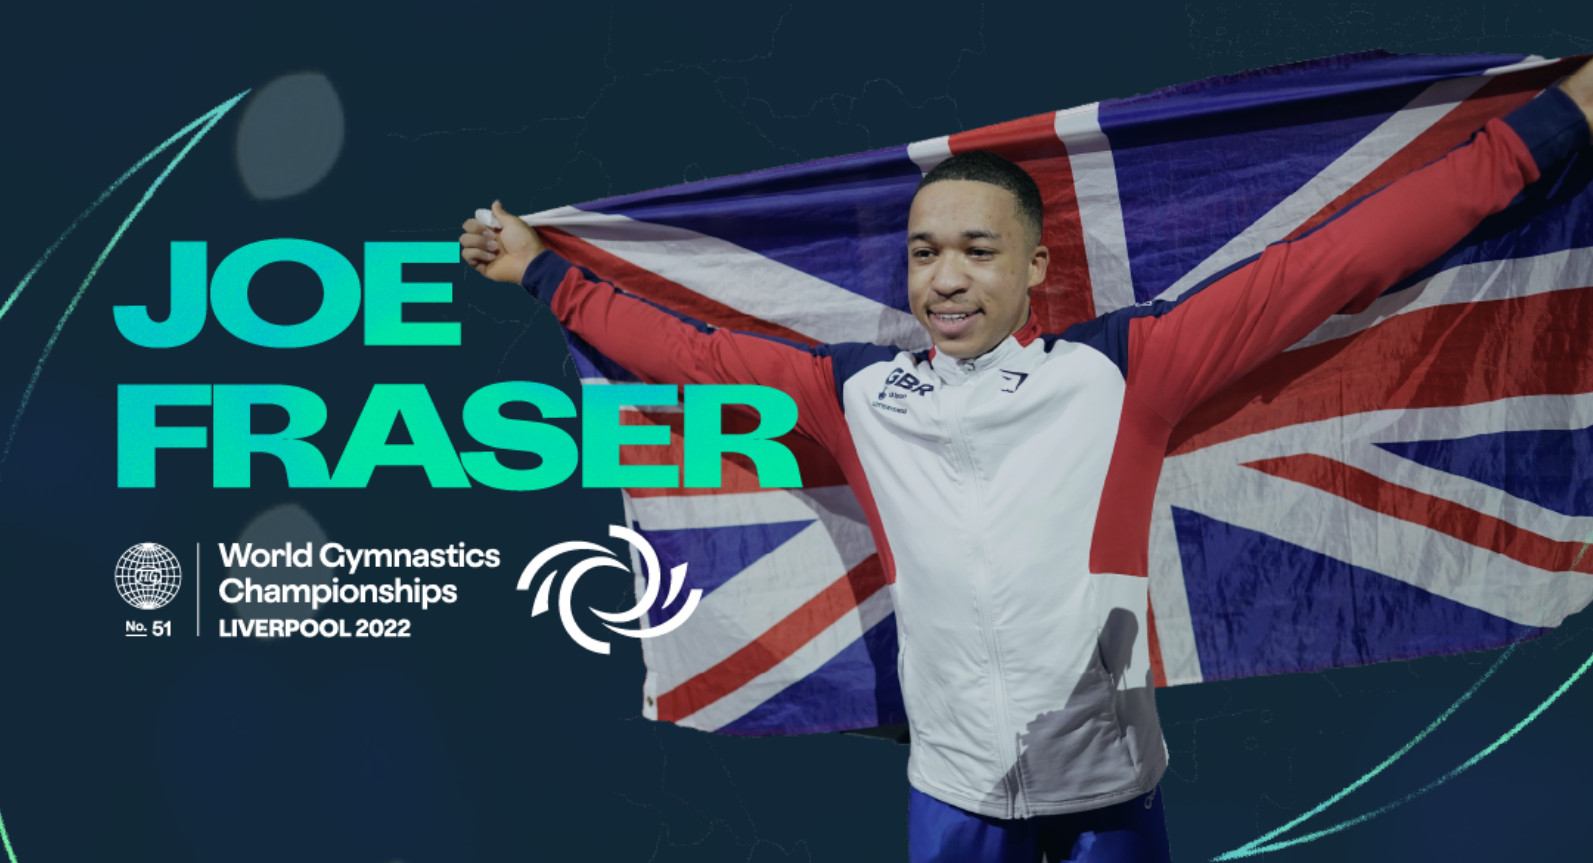 Joe fraser confirmed as ambassador for world gymnastics championships liverpool 2022